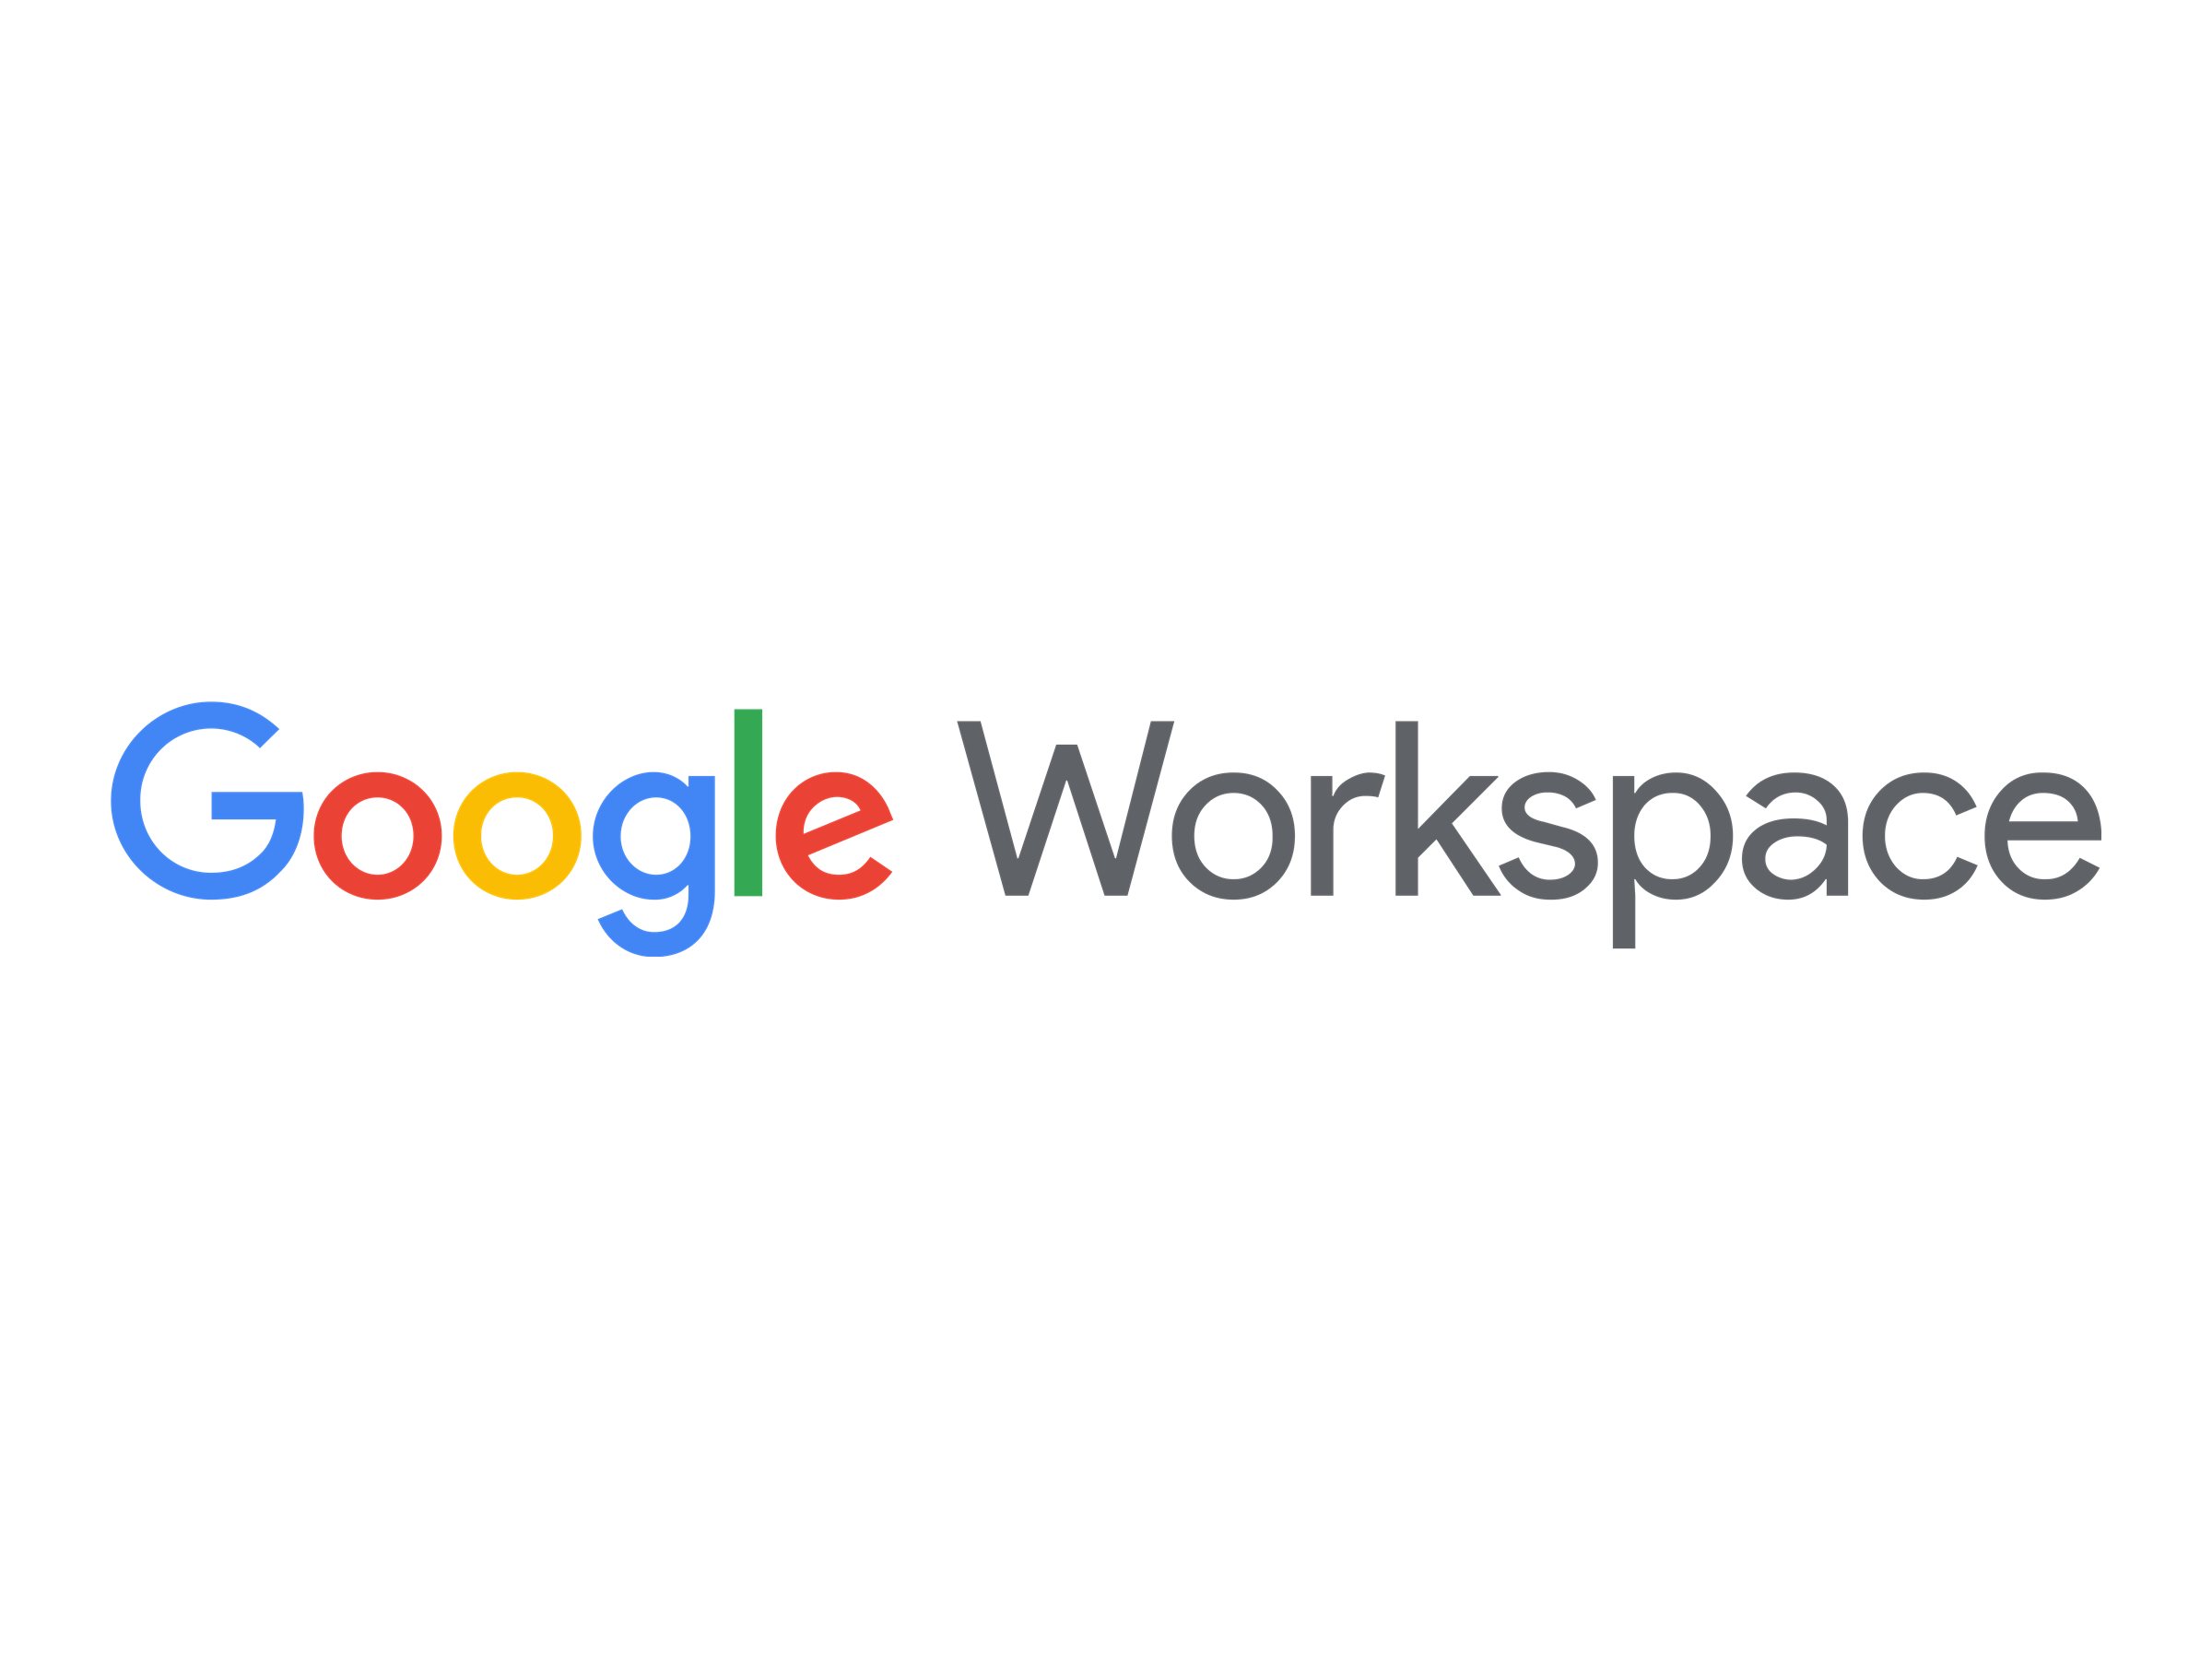 Google Workspace Enterprise Standard